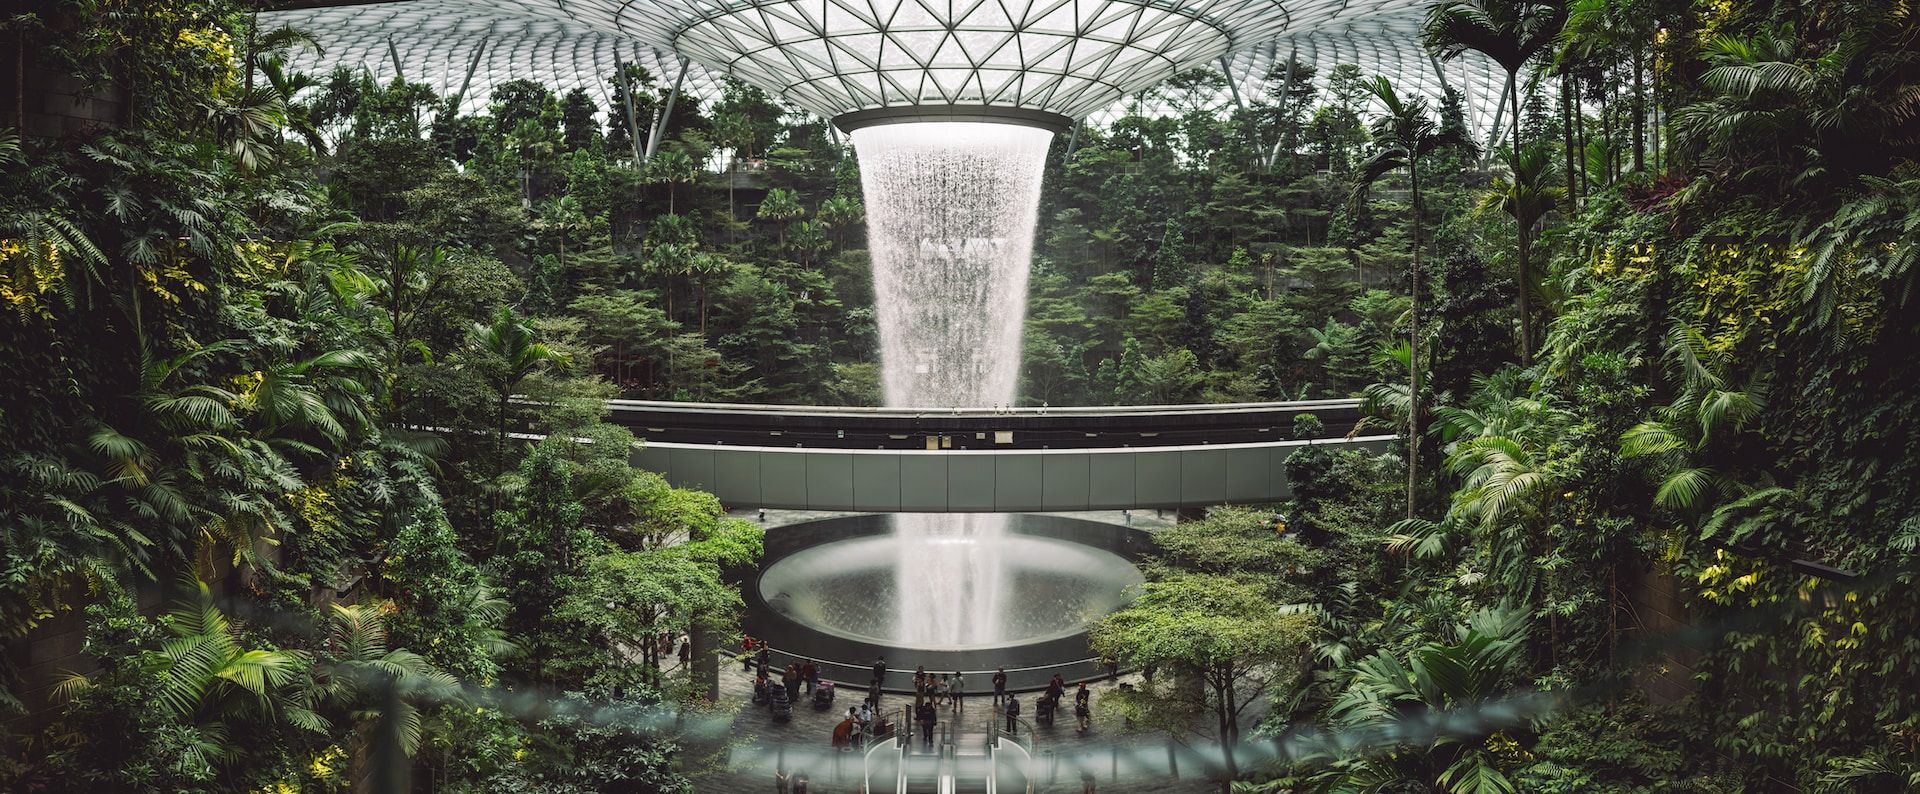 Waterfall inside Jewel at Changi Airport